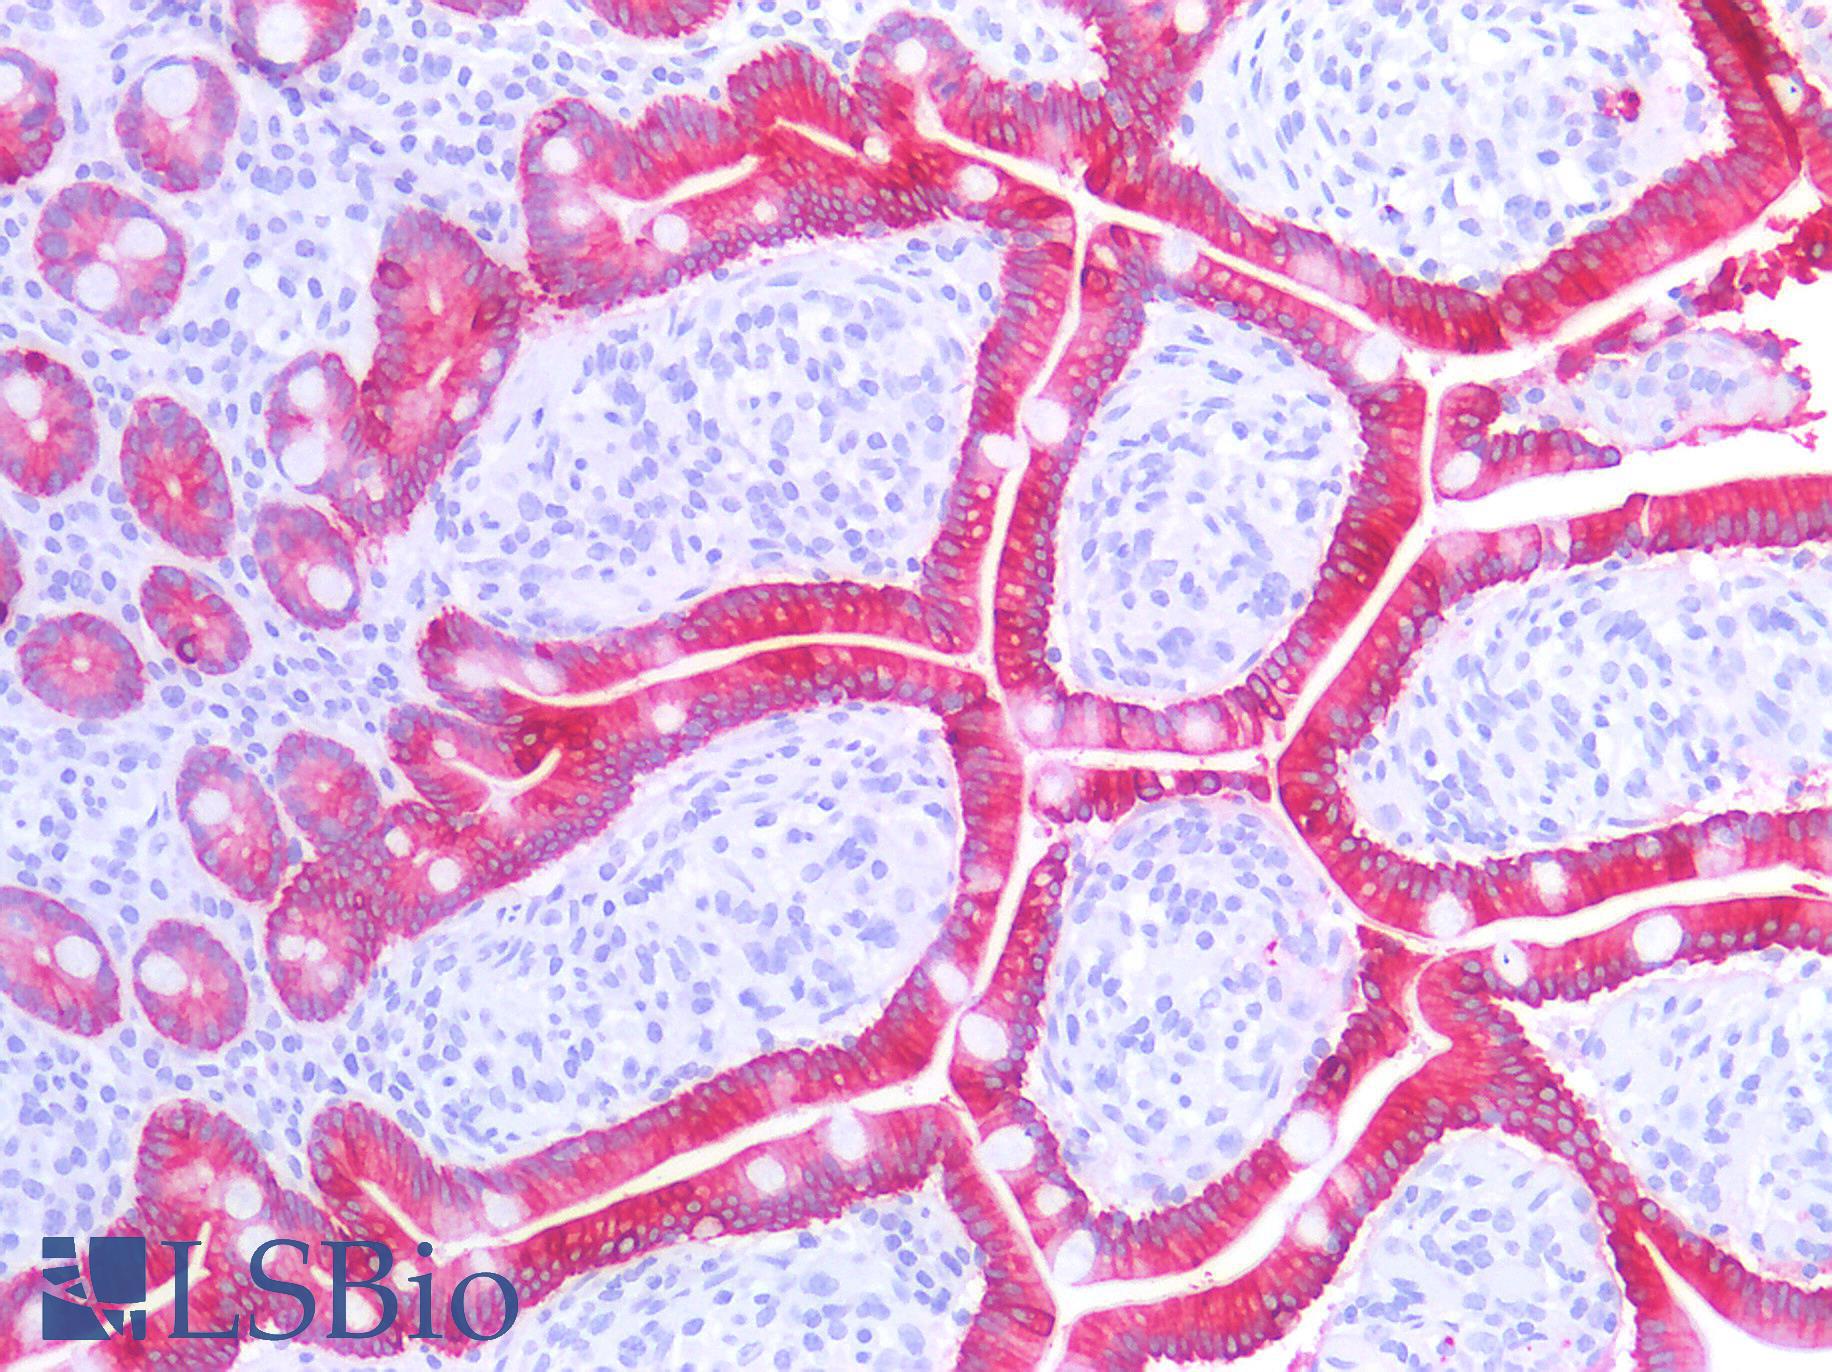 Acidic Cytokeratin AE1 Antibody - Human Small Intestine: Formalin-Fixed, Paraffin-Embedded (FFPE)